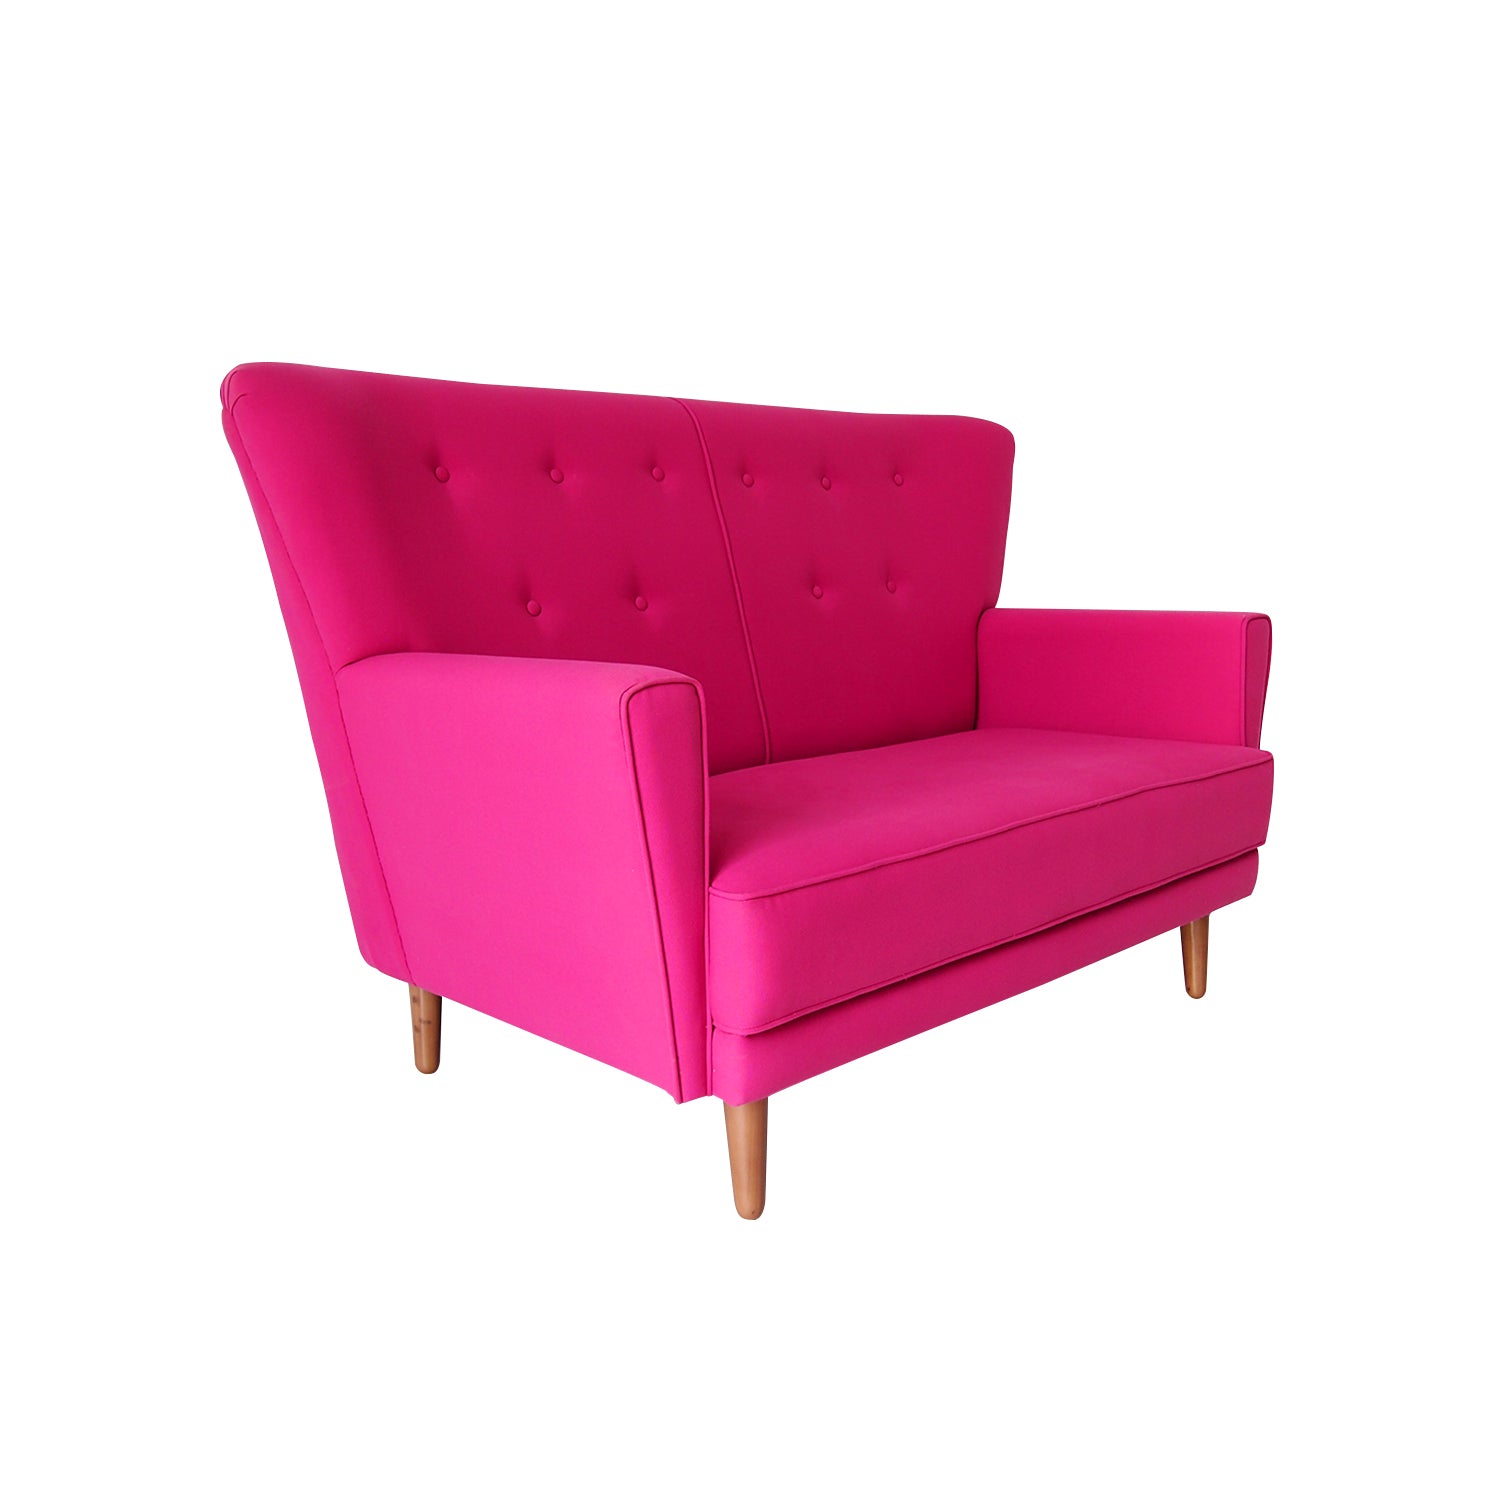 Amara Pink Sofa 2 Seater